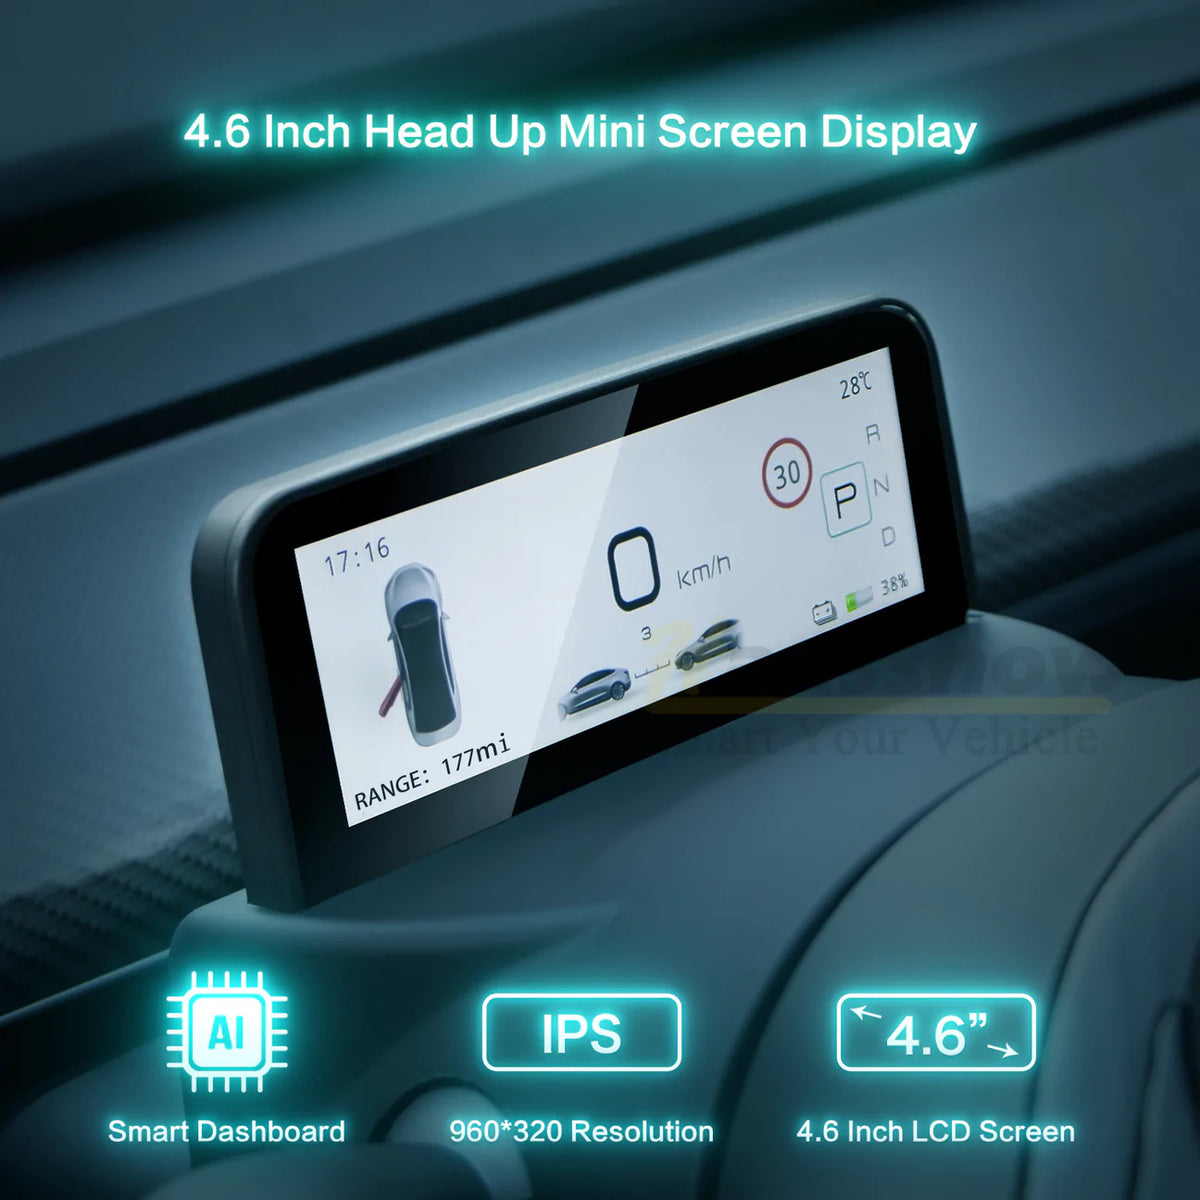 Linux System Mini LCD Dashboard For Tesla Model 3/Y 2017-2022 Smart Di –  KSPIVauto